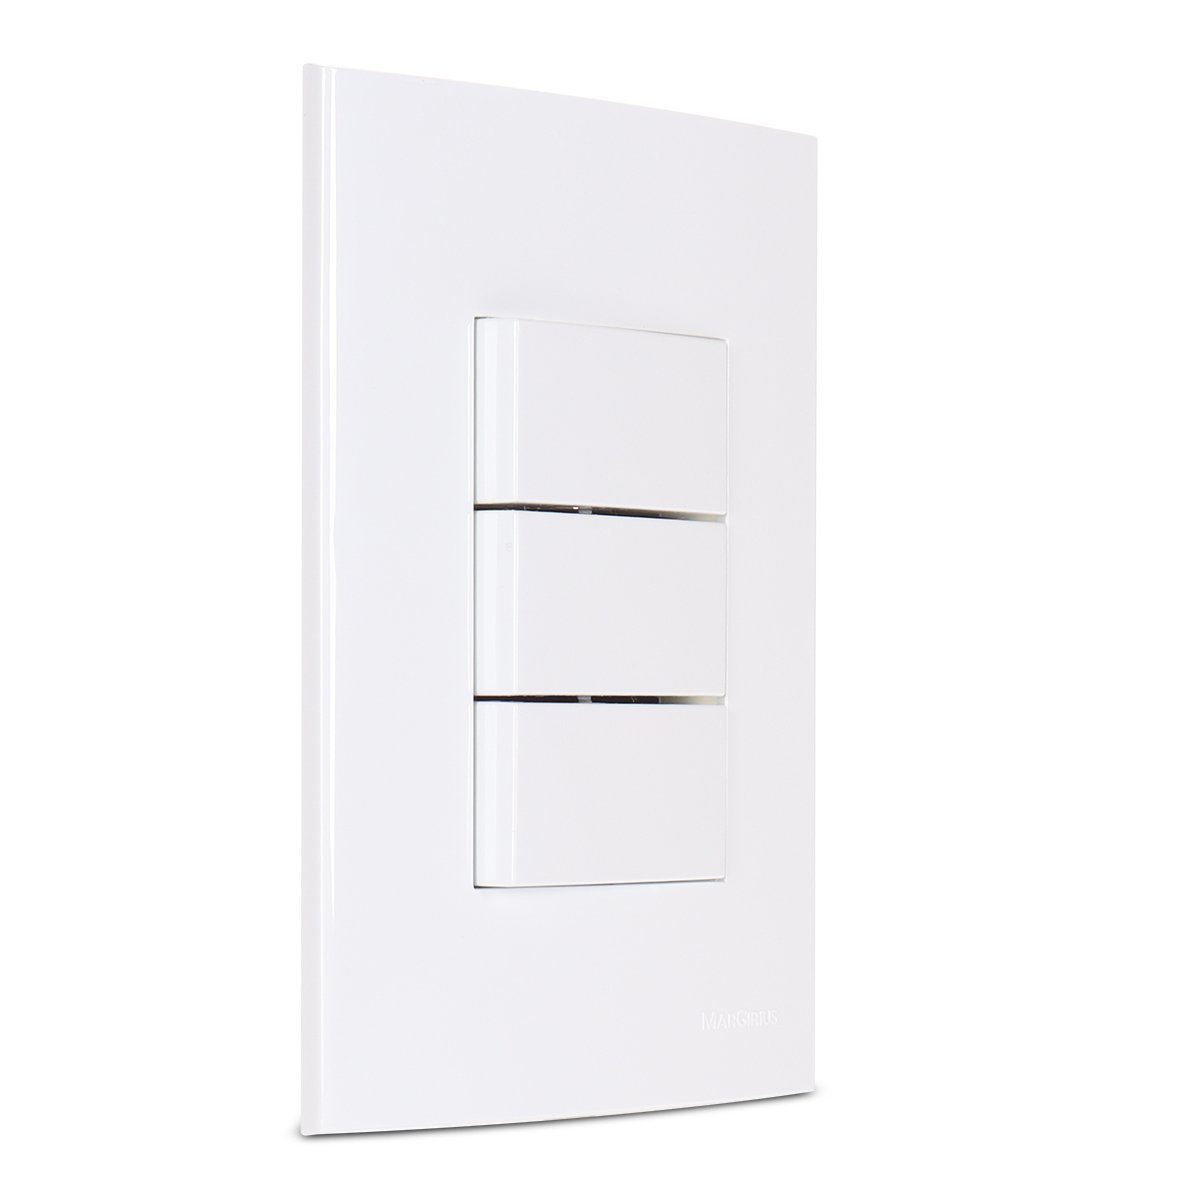 Interruptor Triplo Simples Modular Branco Sleek Margirius Cor:branco - 1